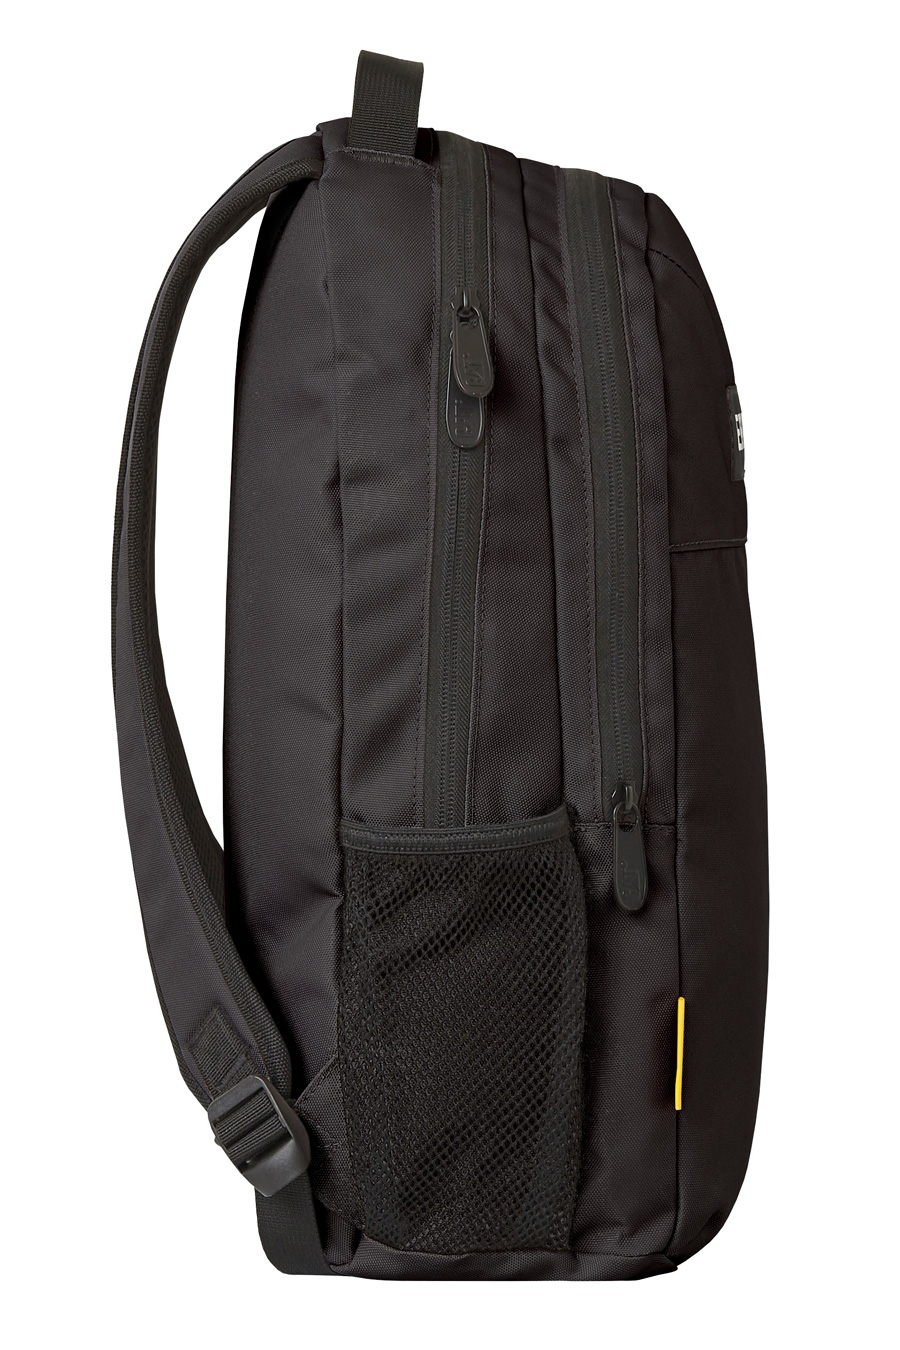 Backpack CAT 84453-01